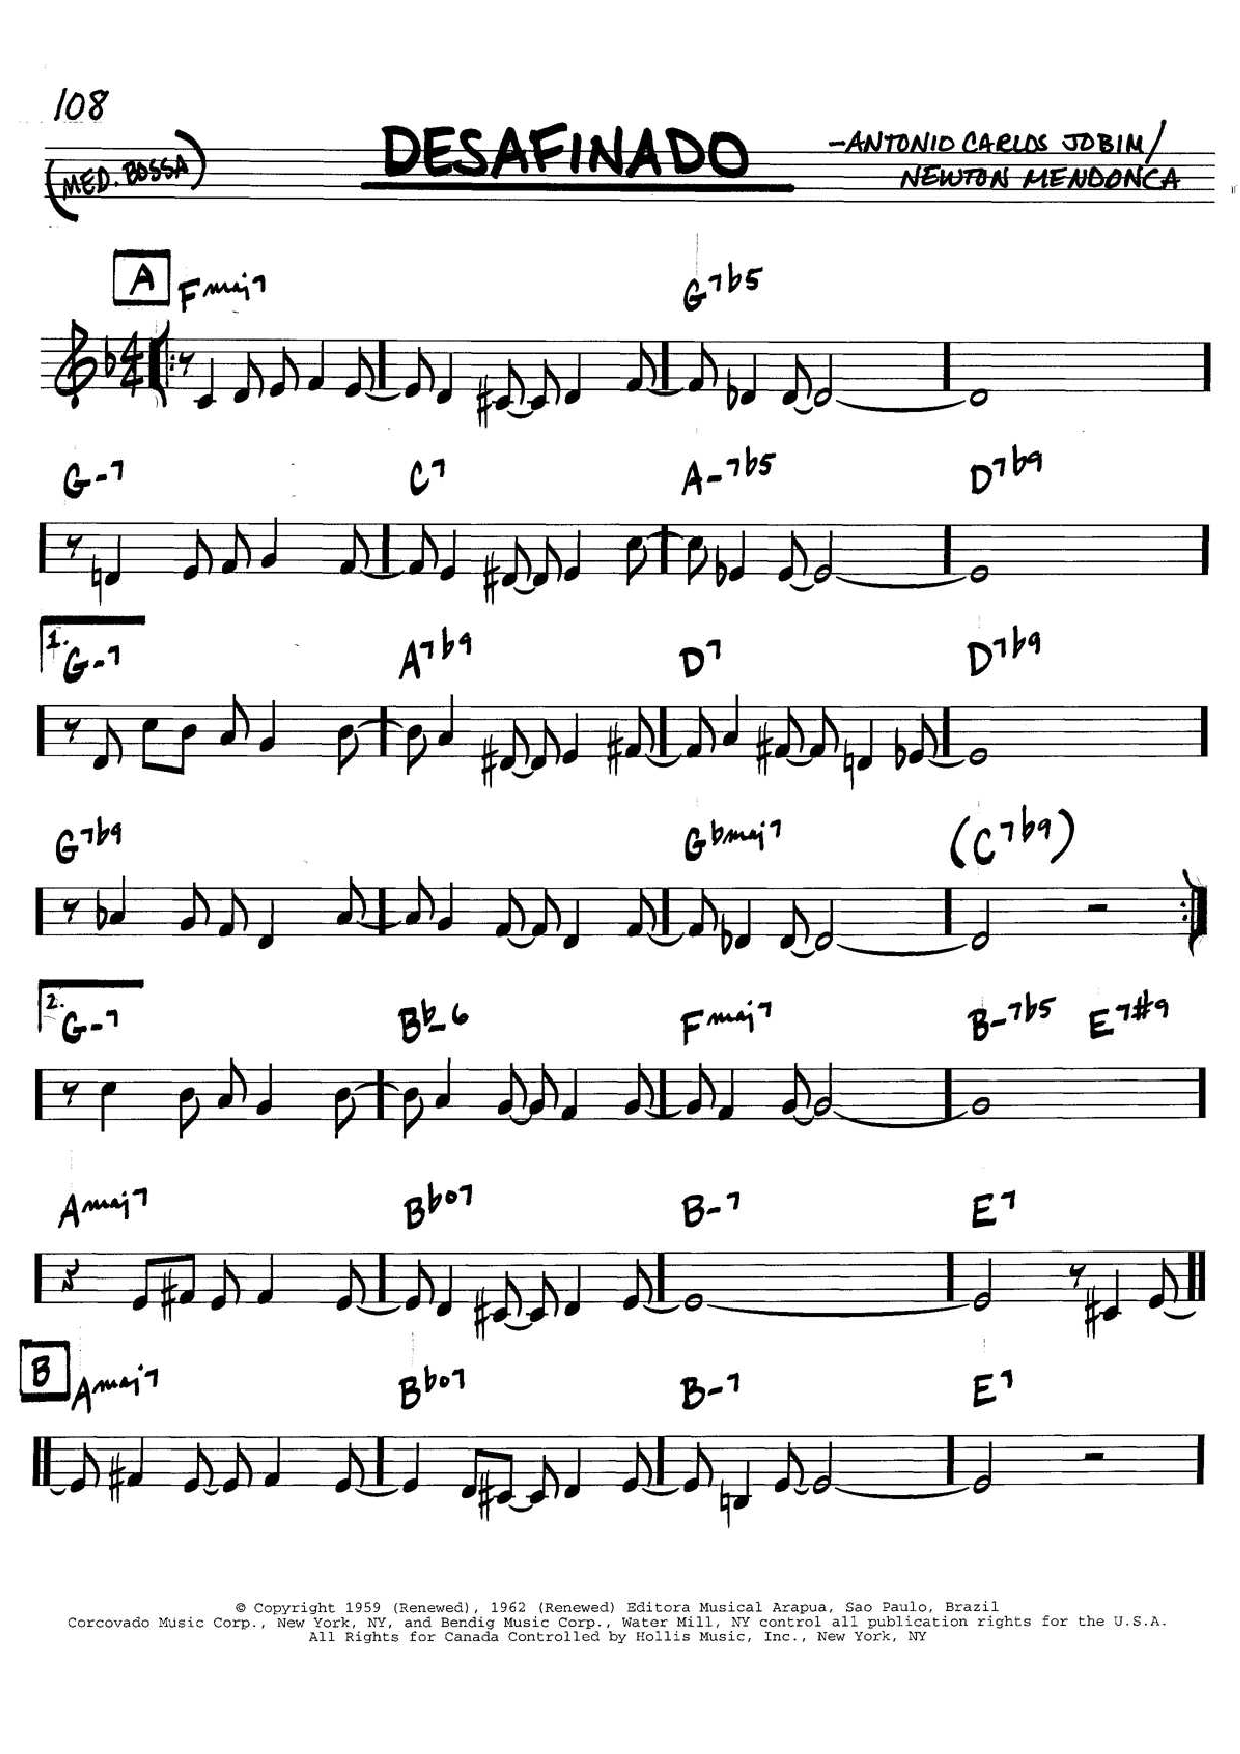 Antonio Carlos Jobim Desafinado Sheet Music Notes & Chords for Real Book – Melody & Chords - Download or Print PDF